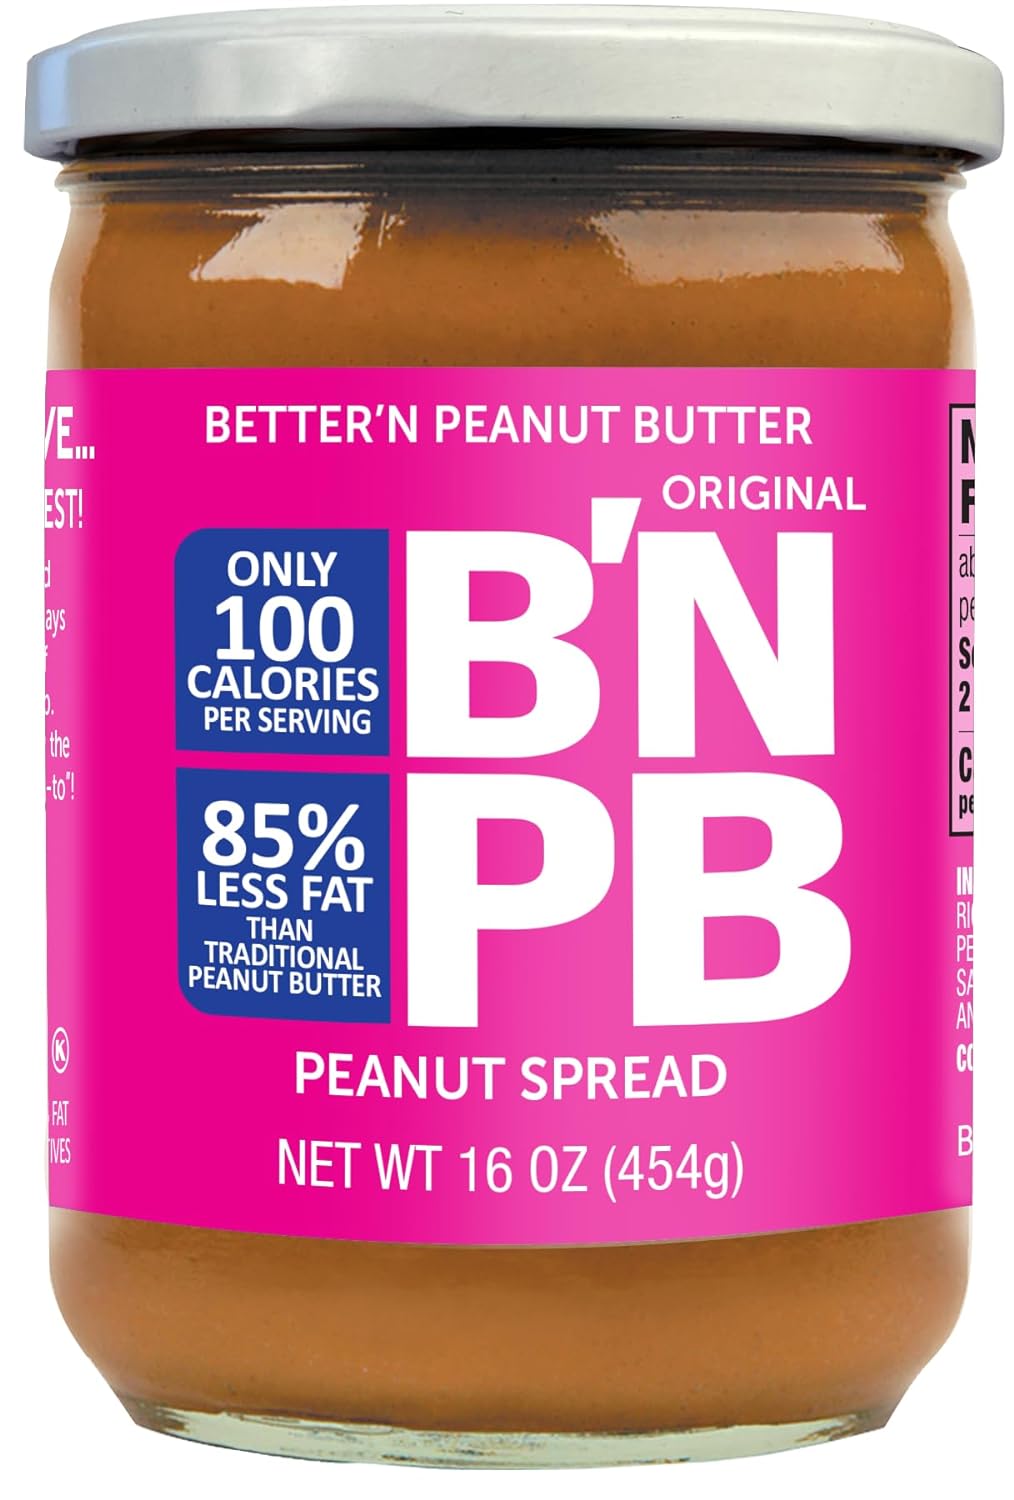 Better'n Peanut Butter, Peanut Spread
